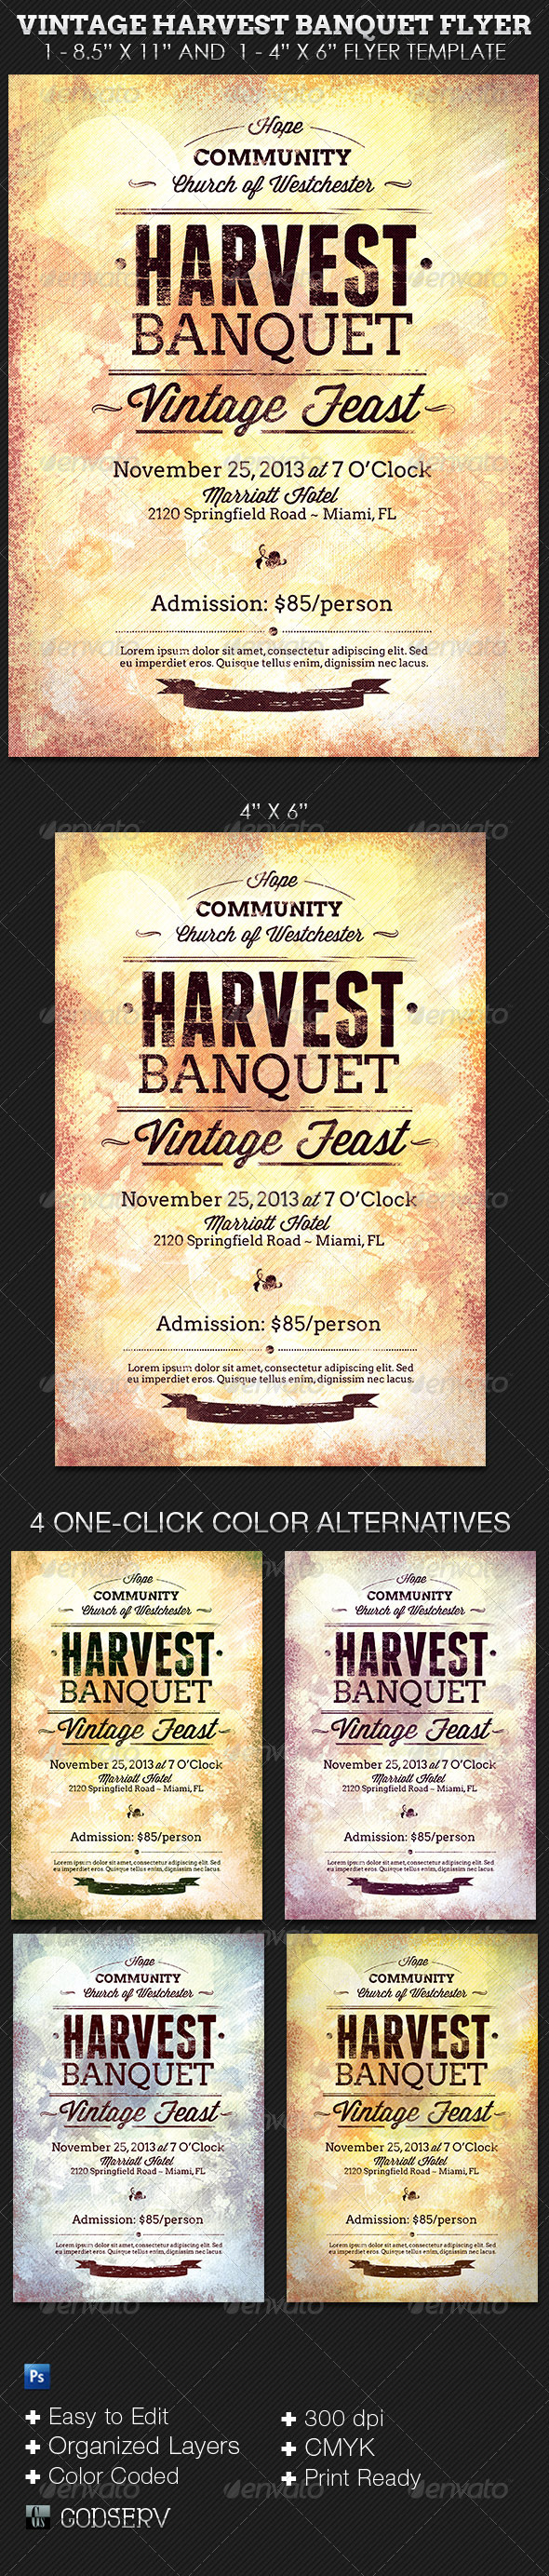 Vintage-Harvest-Banquet-Flyer-Template-Preview